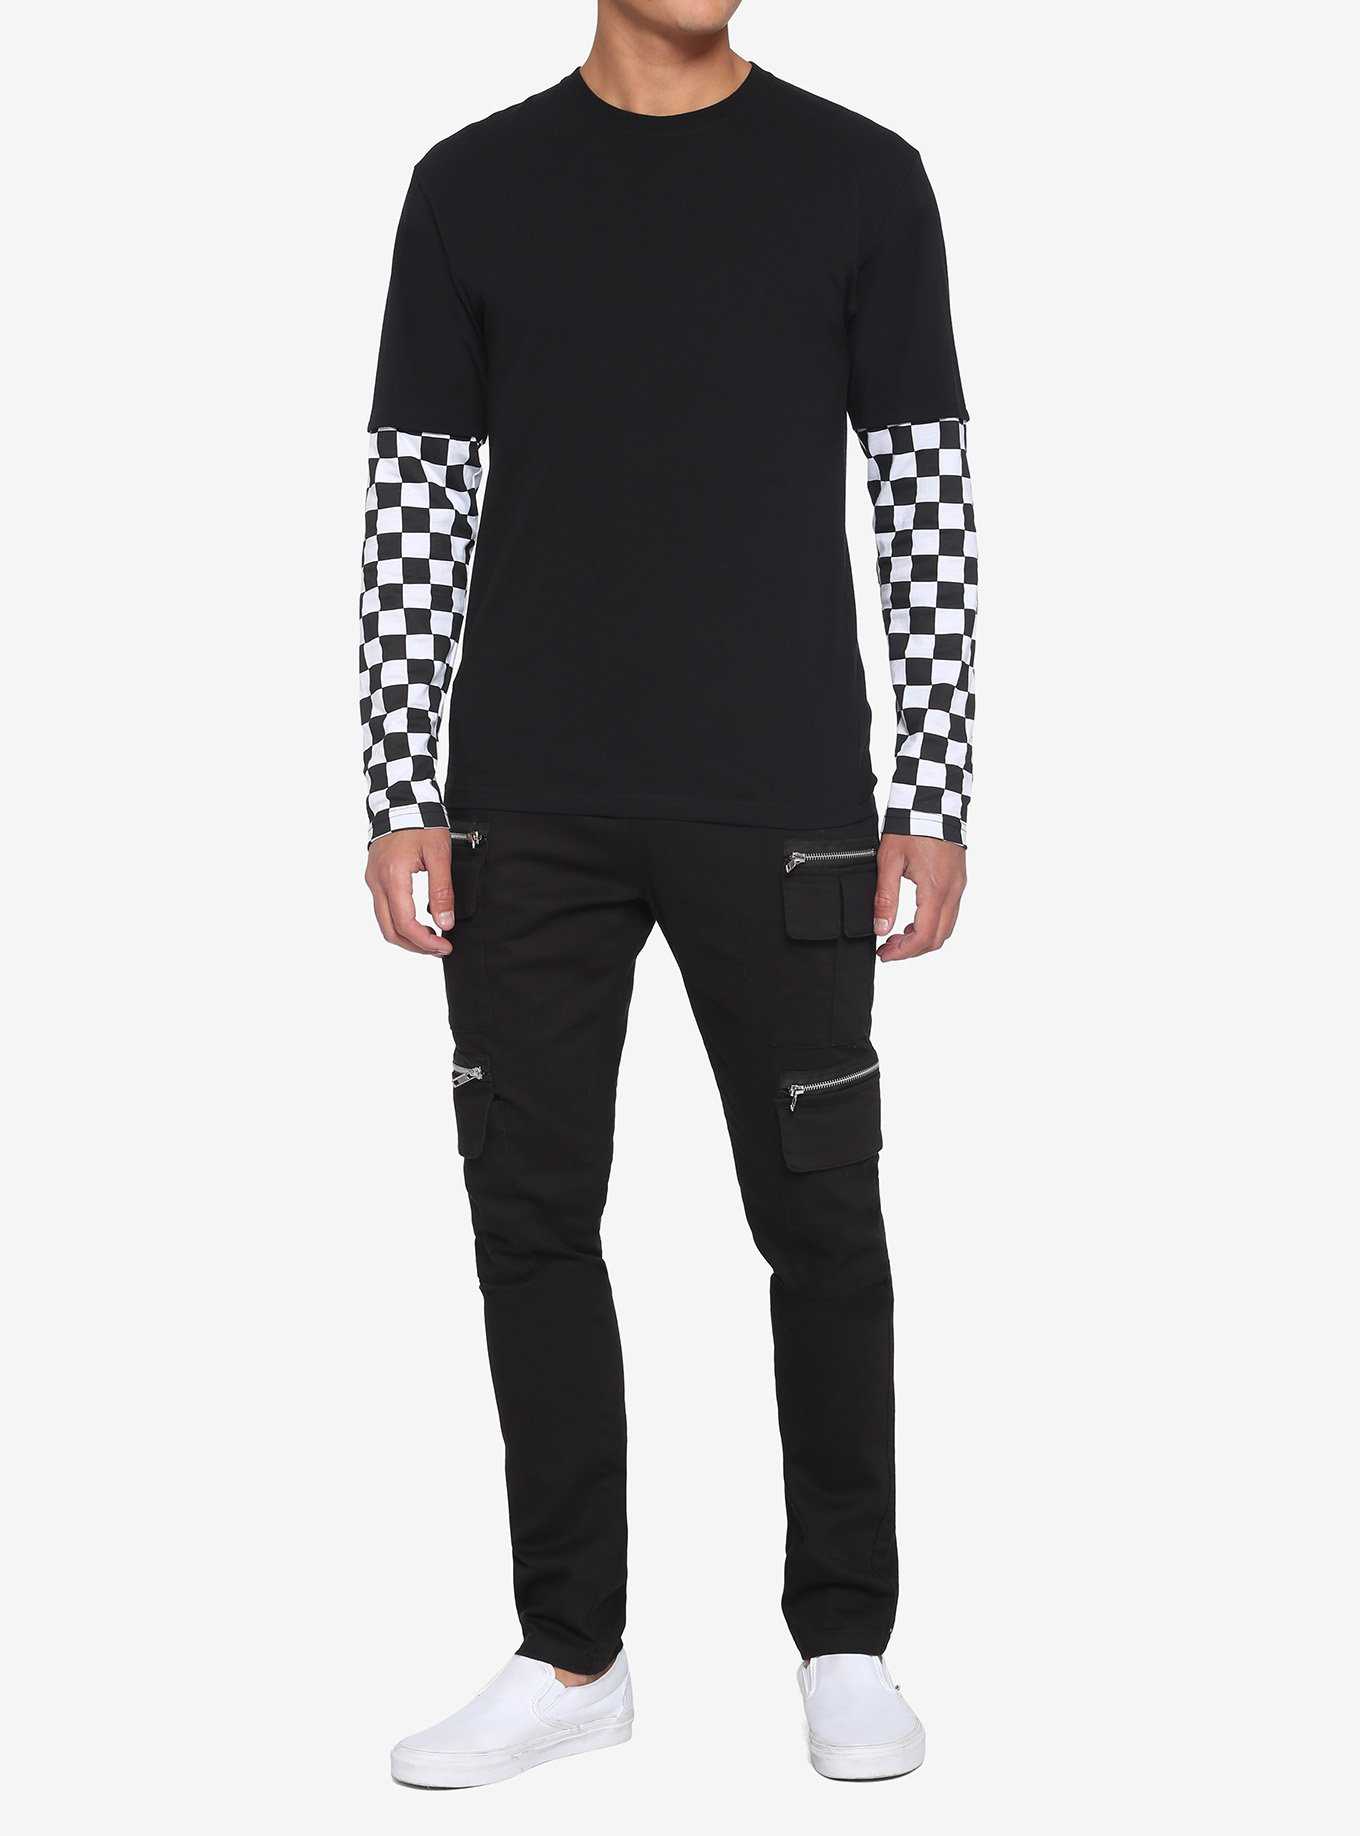 Black & White Checkered Sleeve Twofer Long-Sleeve T-Shirt, , hi-res